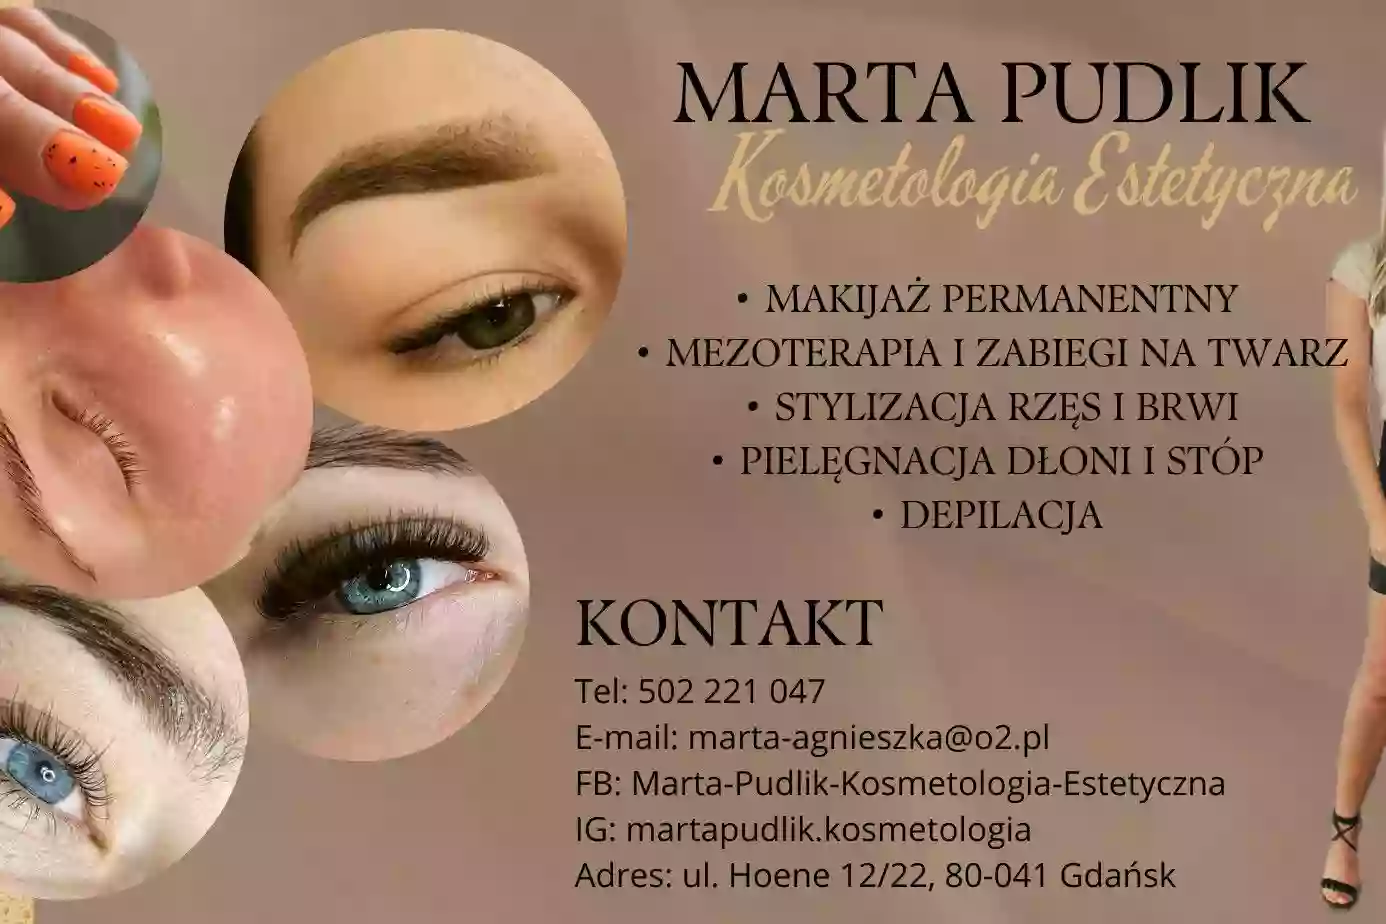 Marta Pudlik Kosmetologia Estetyczna